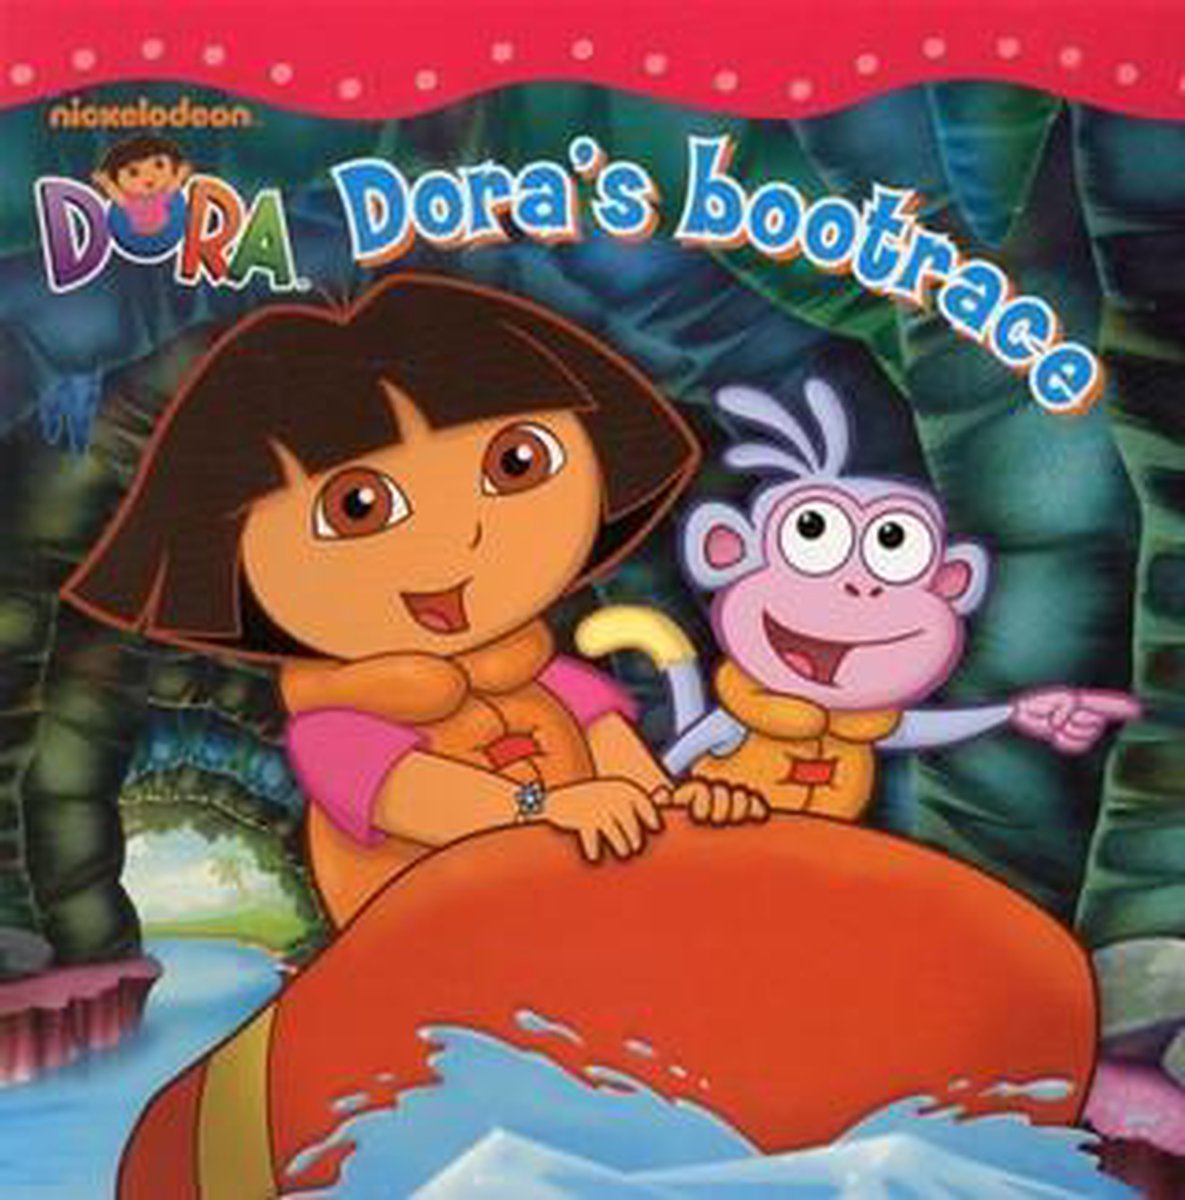 Dora's bootrace